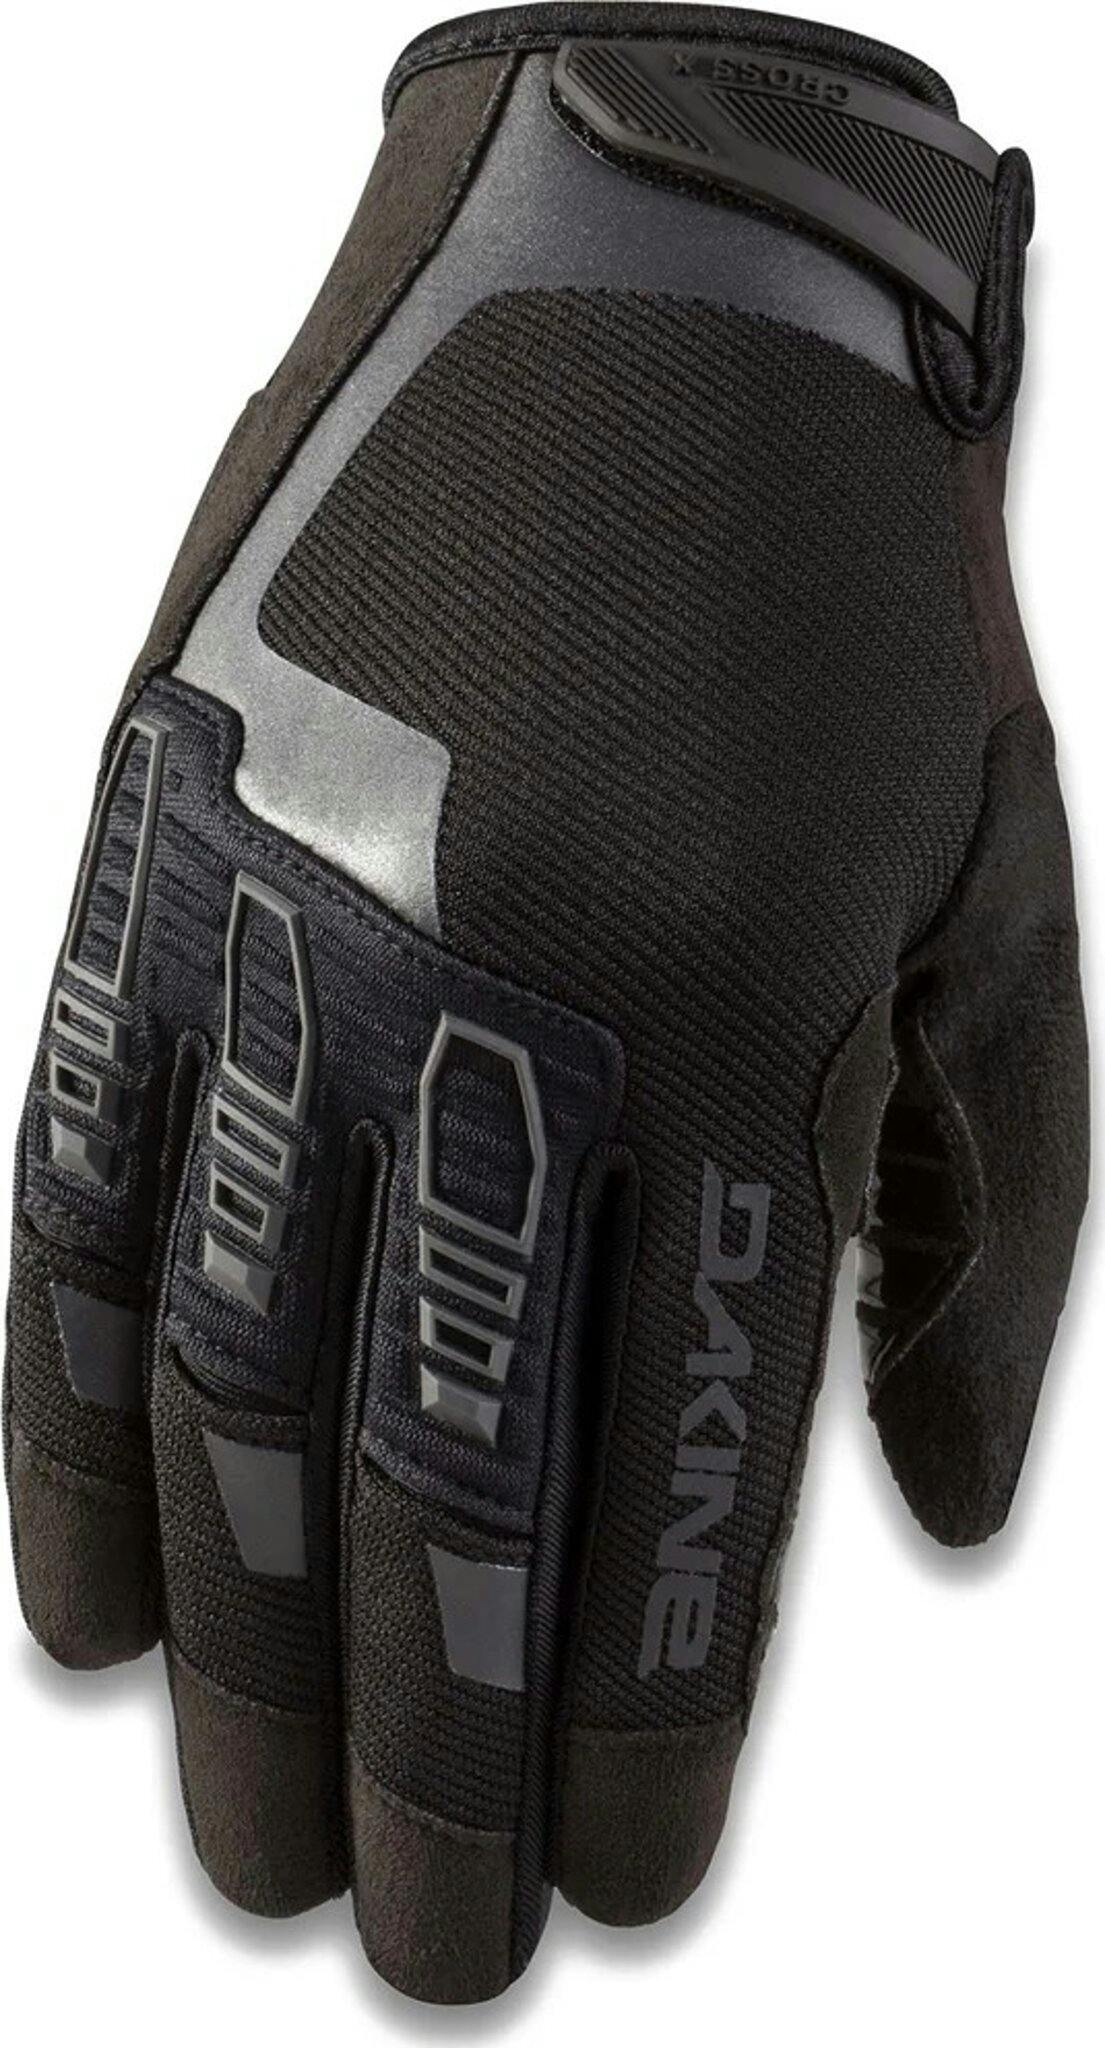 Product image for Cross-X Bike Gloves - Kids